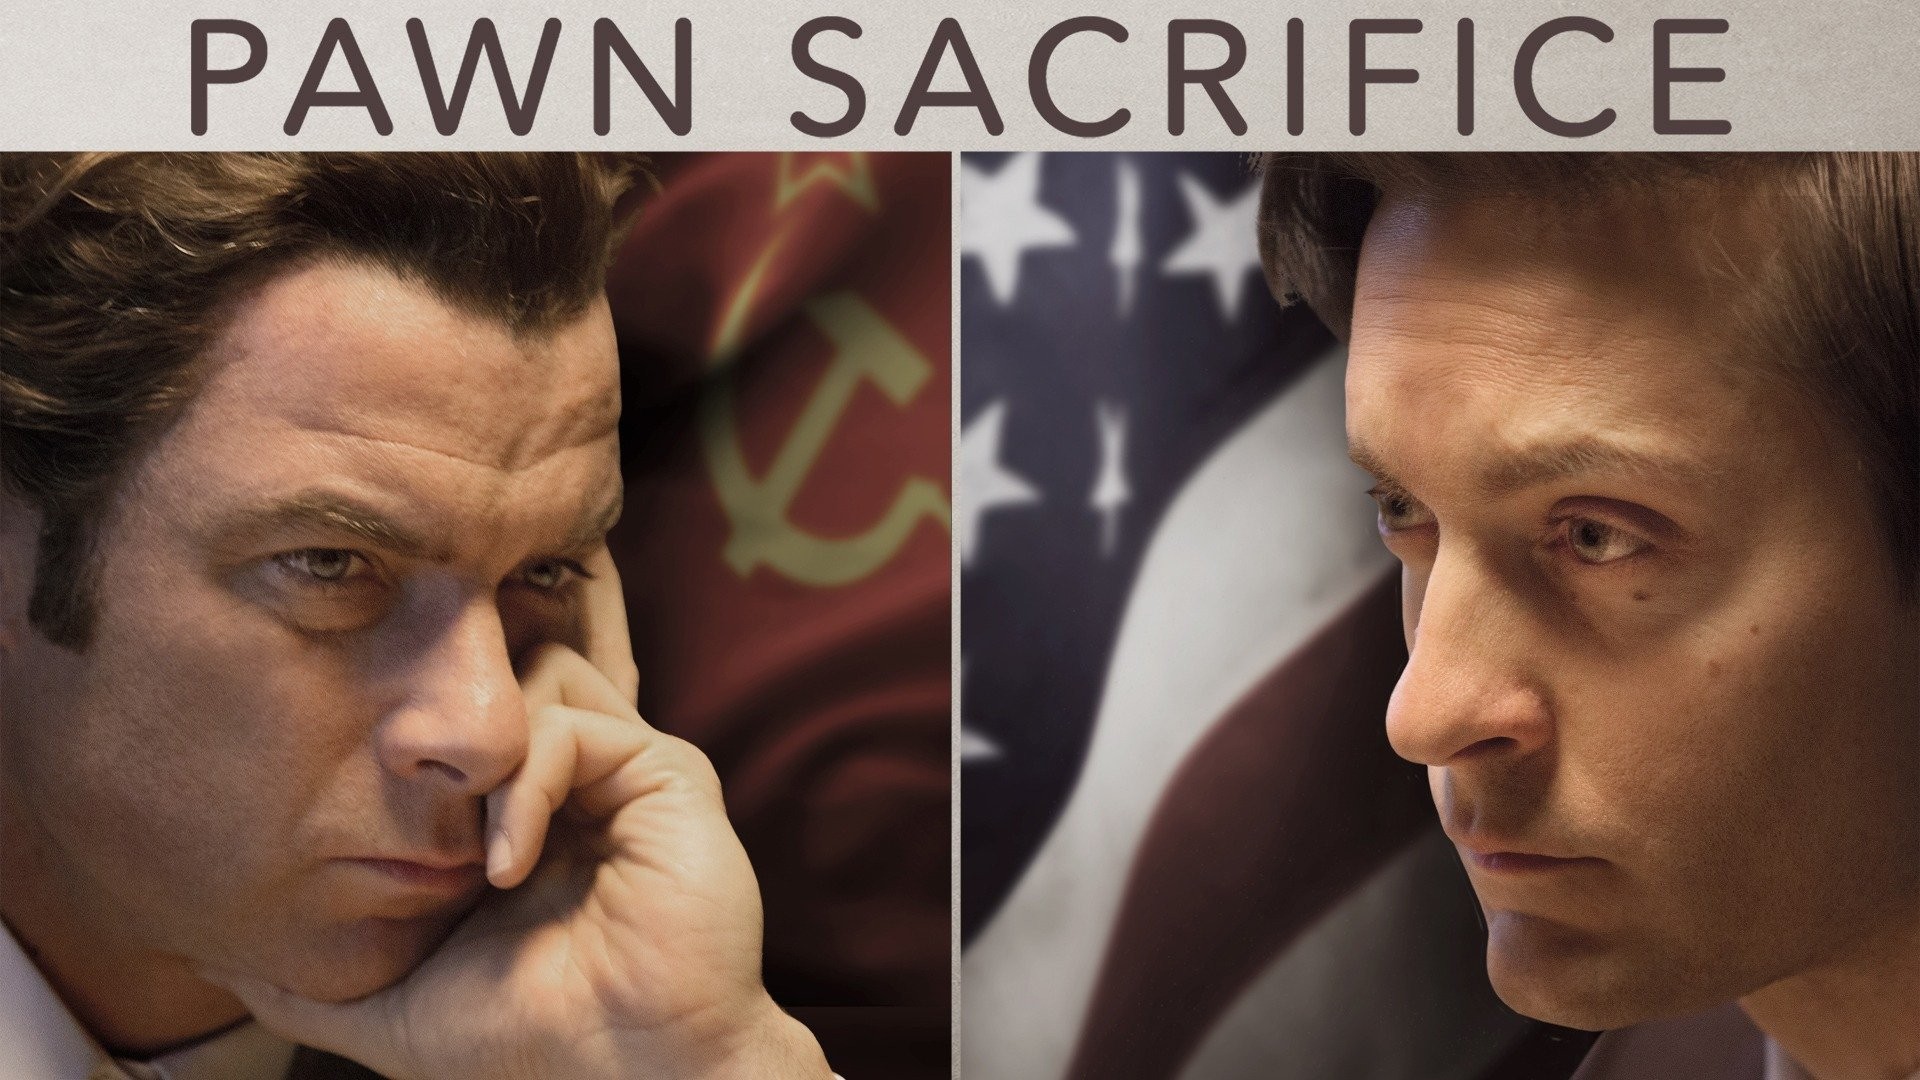 Pawn Sacrifice Critic Reviews